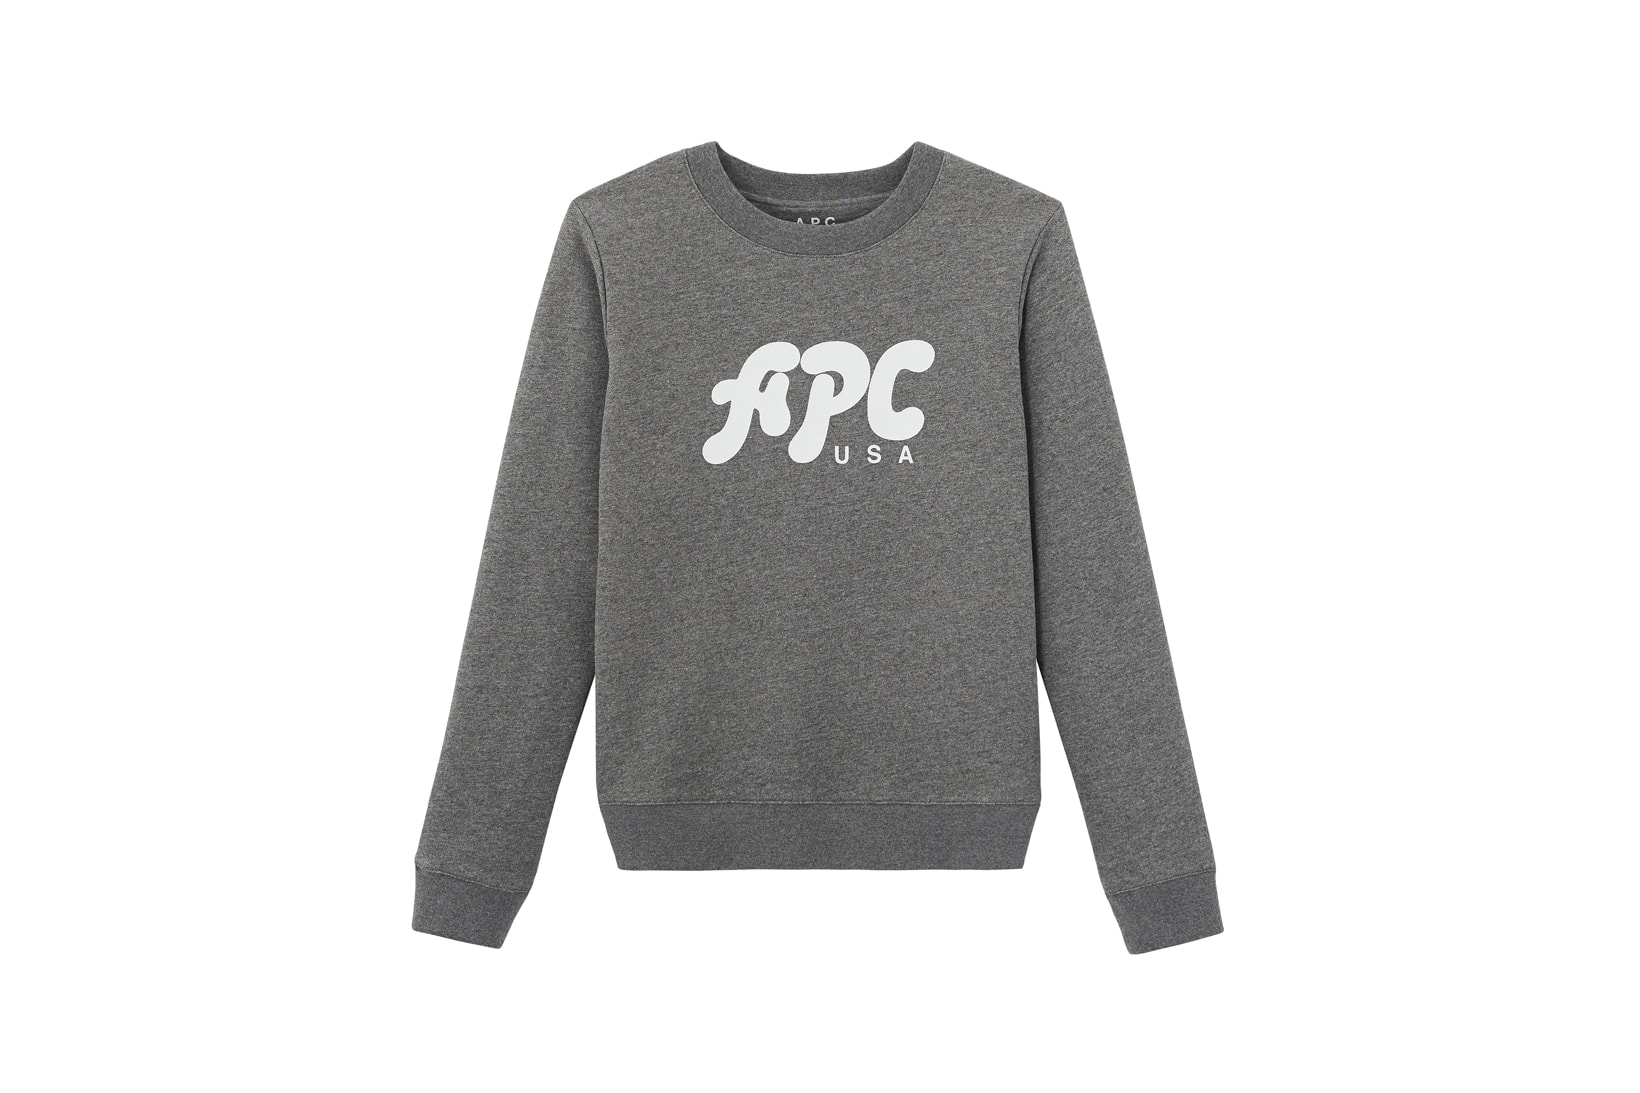 A.P.C. Fall/Winter 2018 Collection Emma Sweatshirt Grey